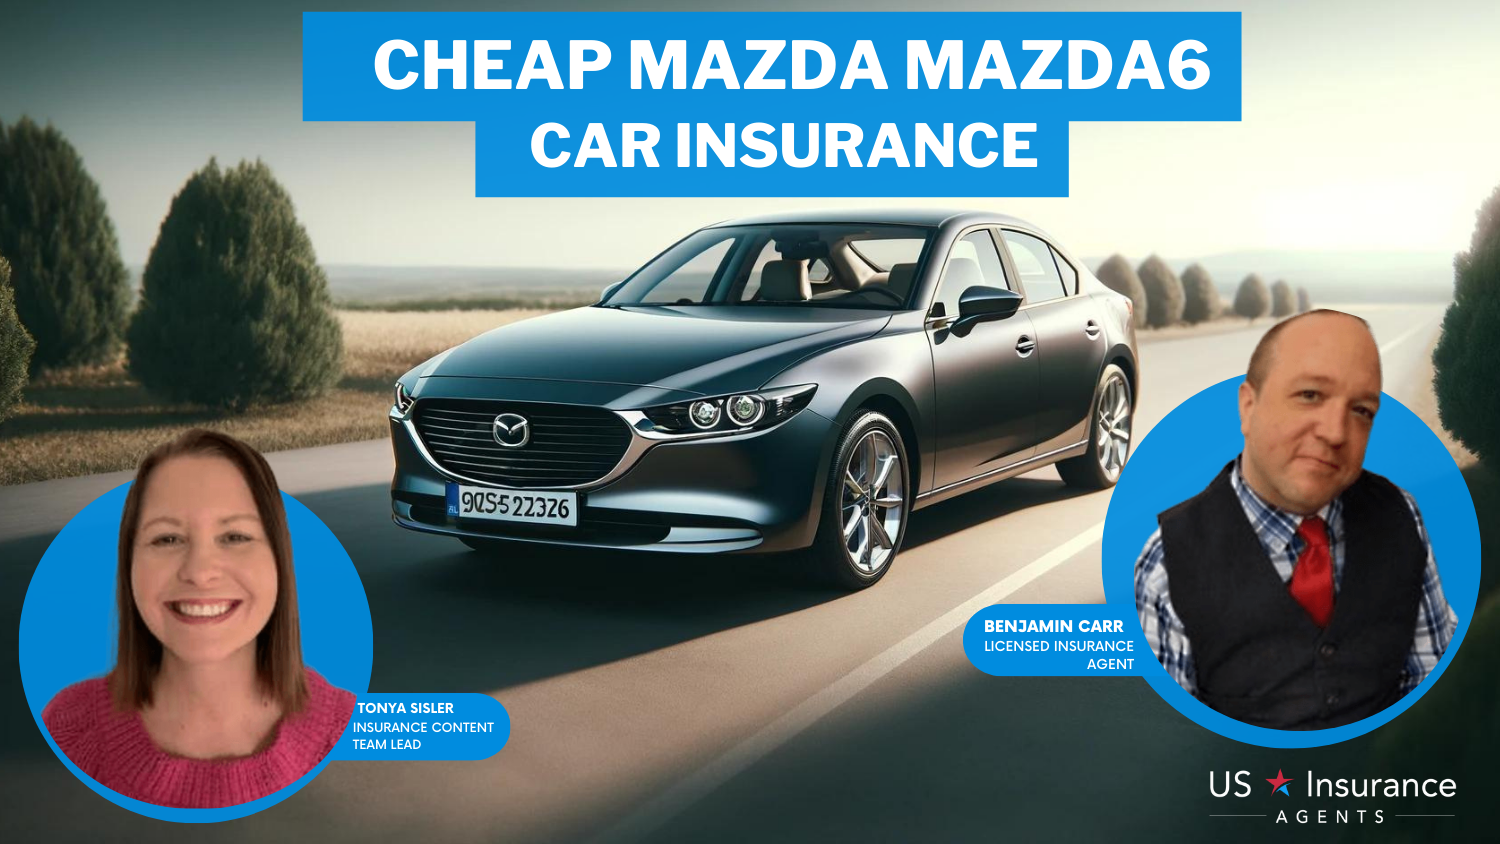 Cheap MAZDA MAZDA6 Car Insurance: Progressive, State Farm, and Nationwide